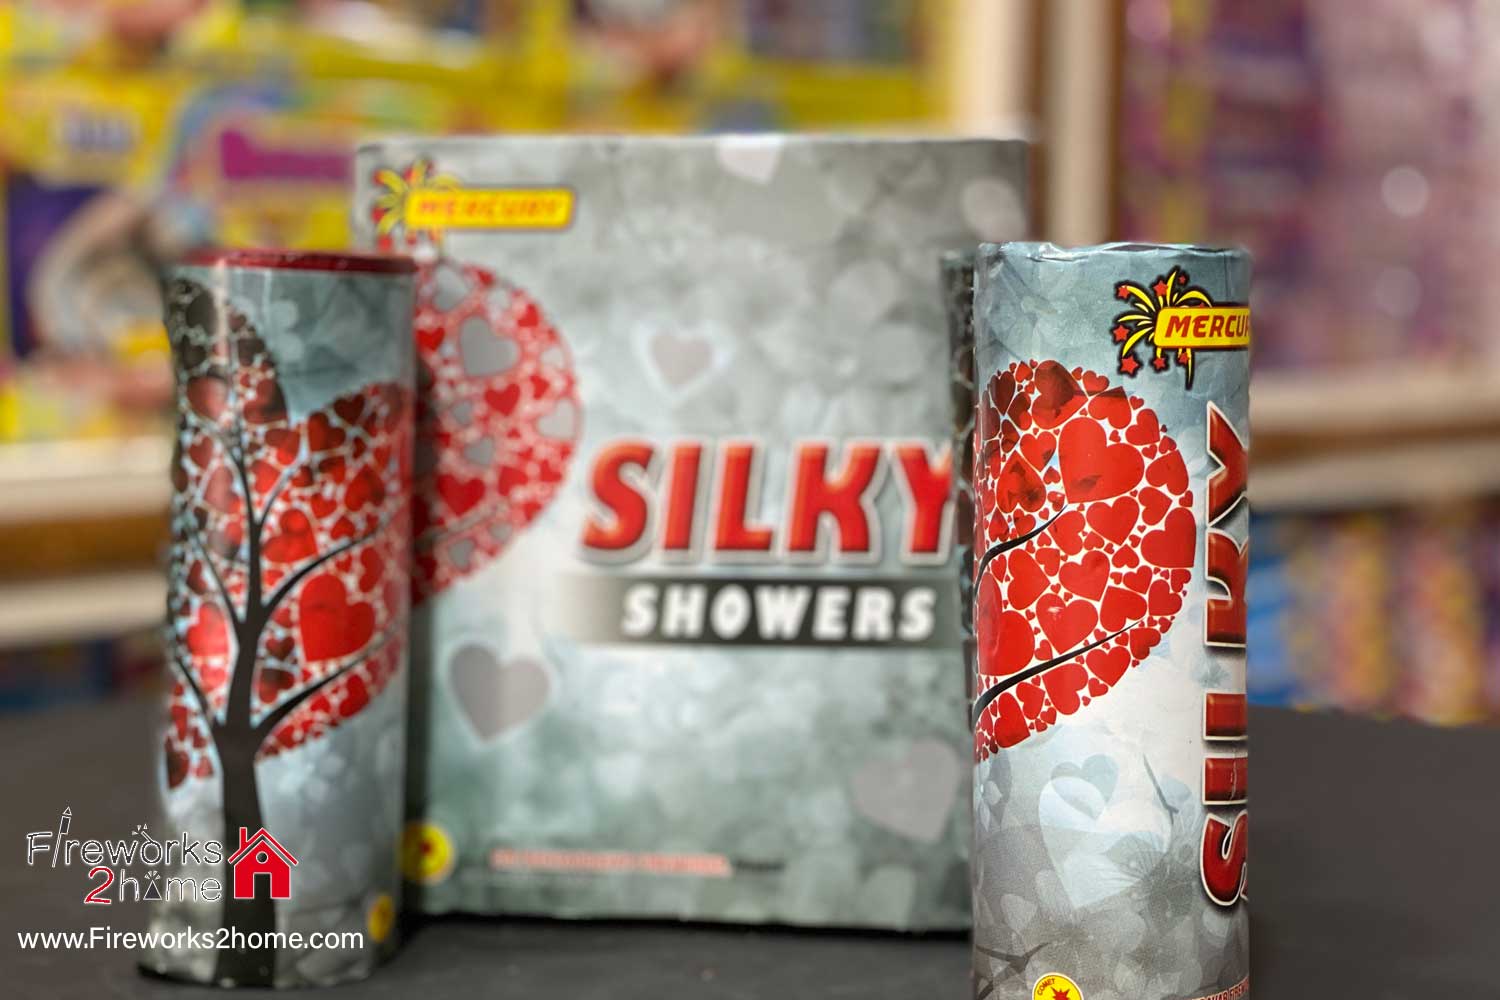 silky-showers-mercury